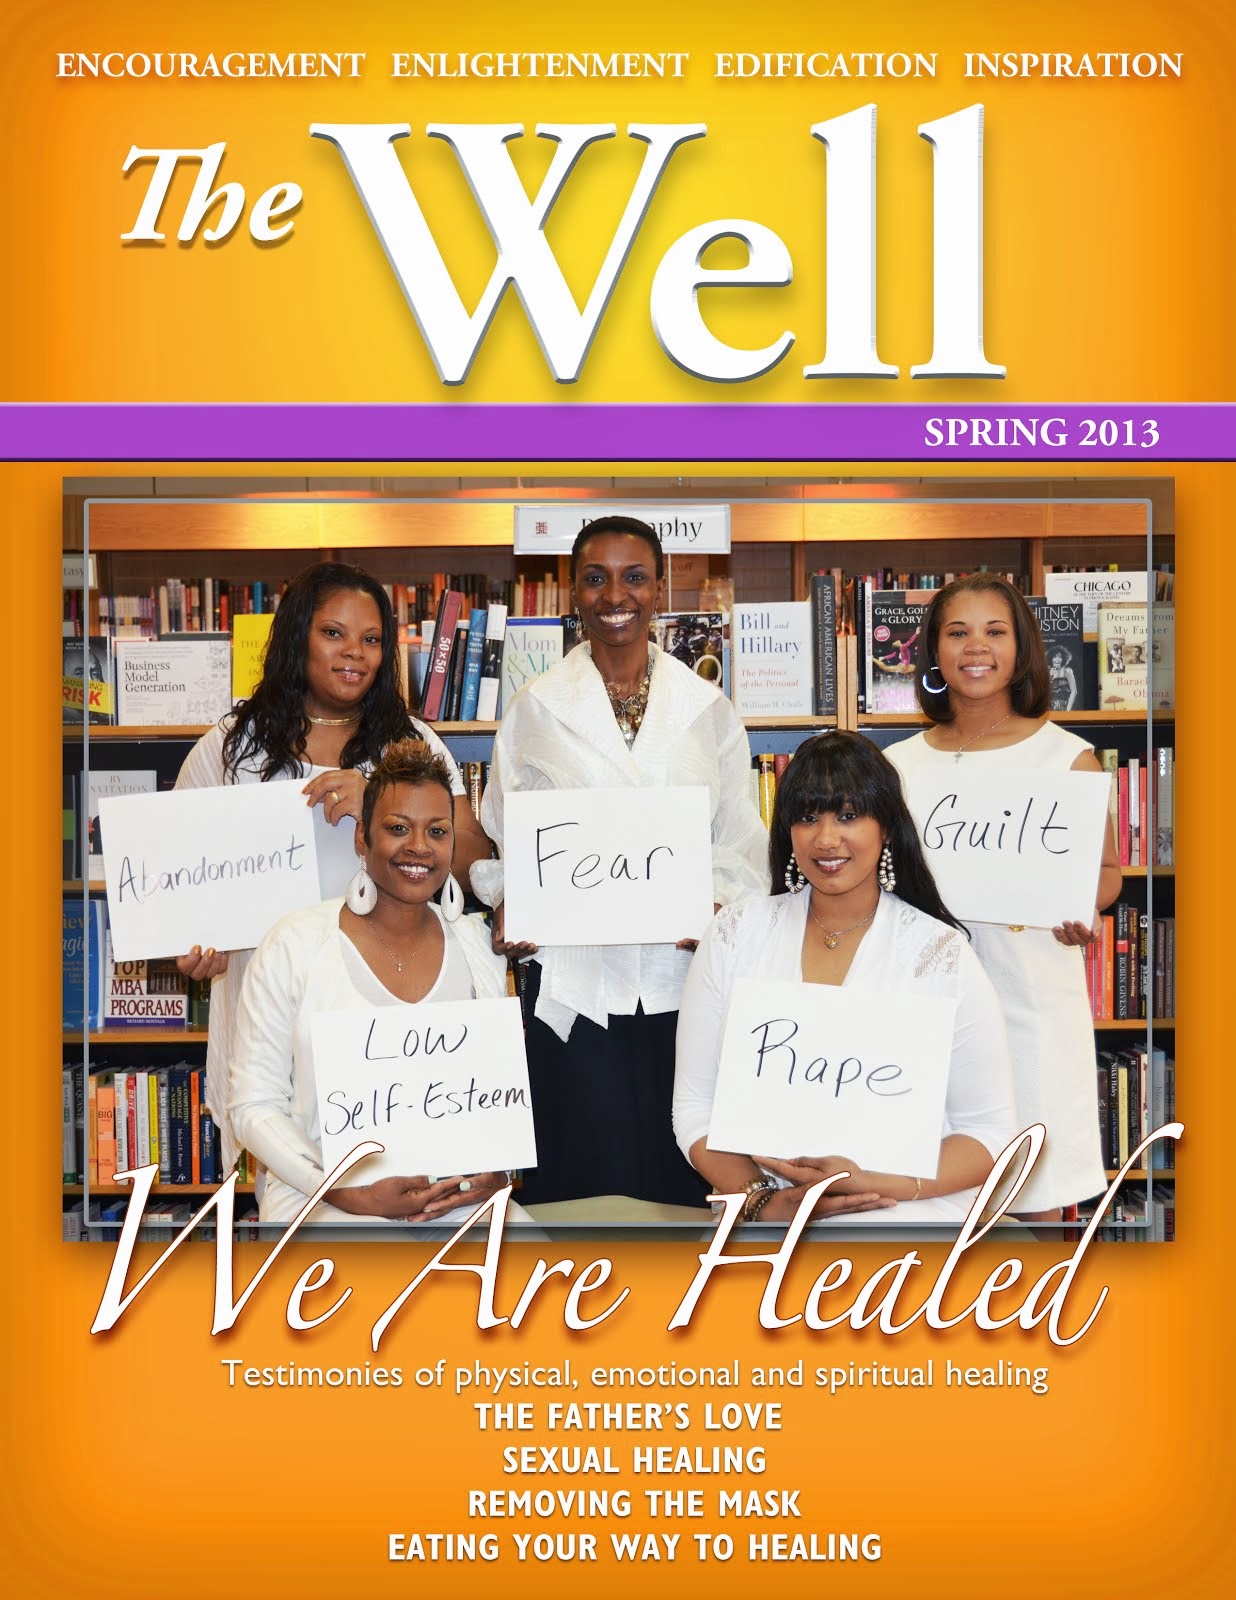 http://www.thewellmagazine.blogspot.com/p/resources.html